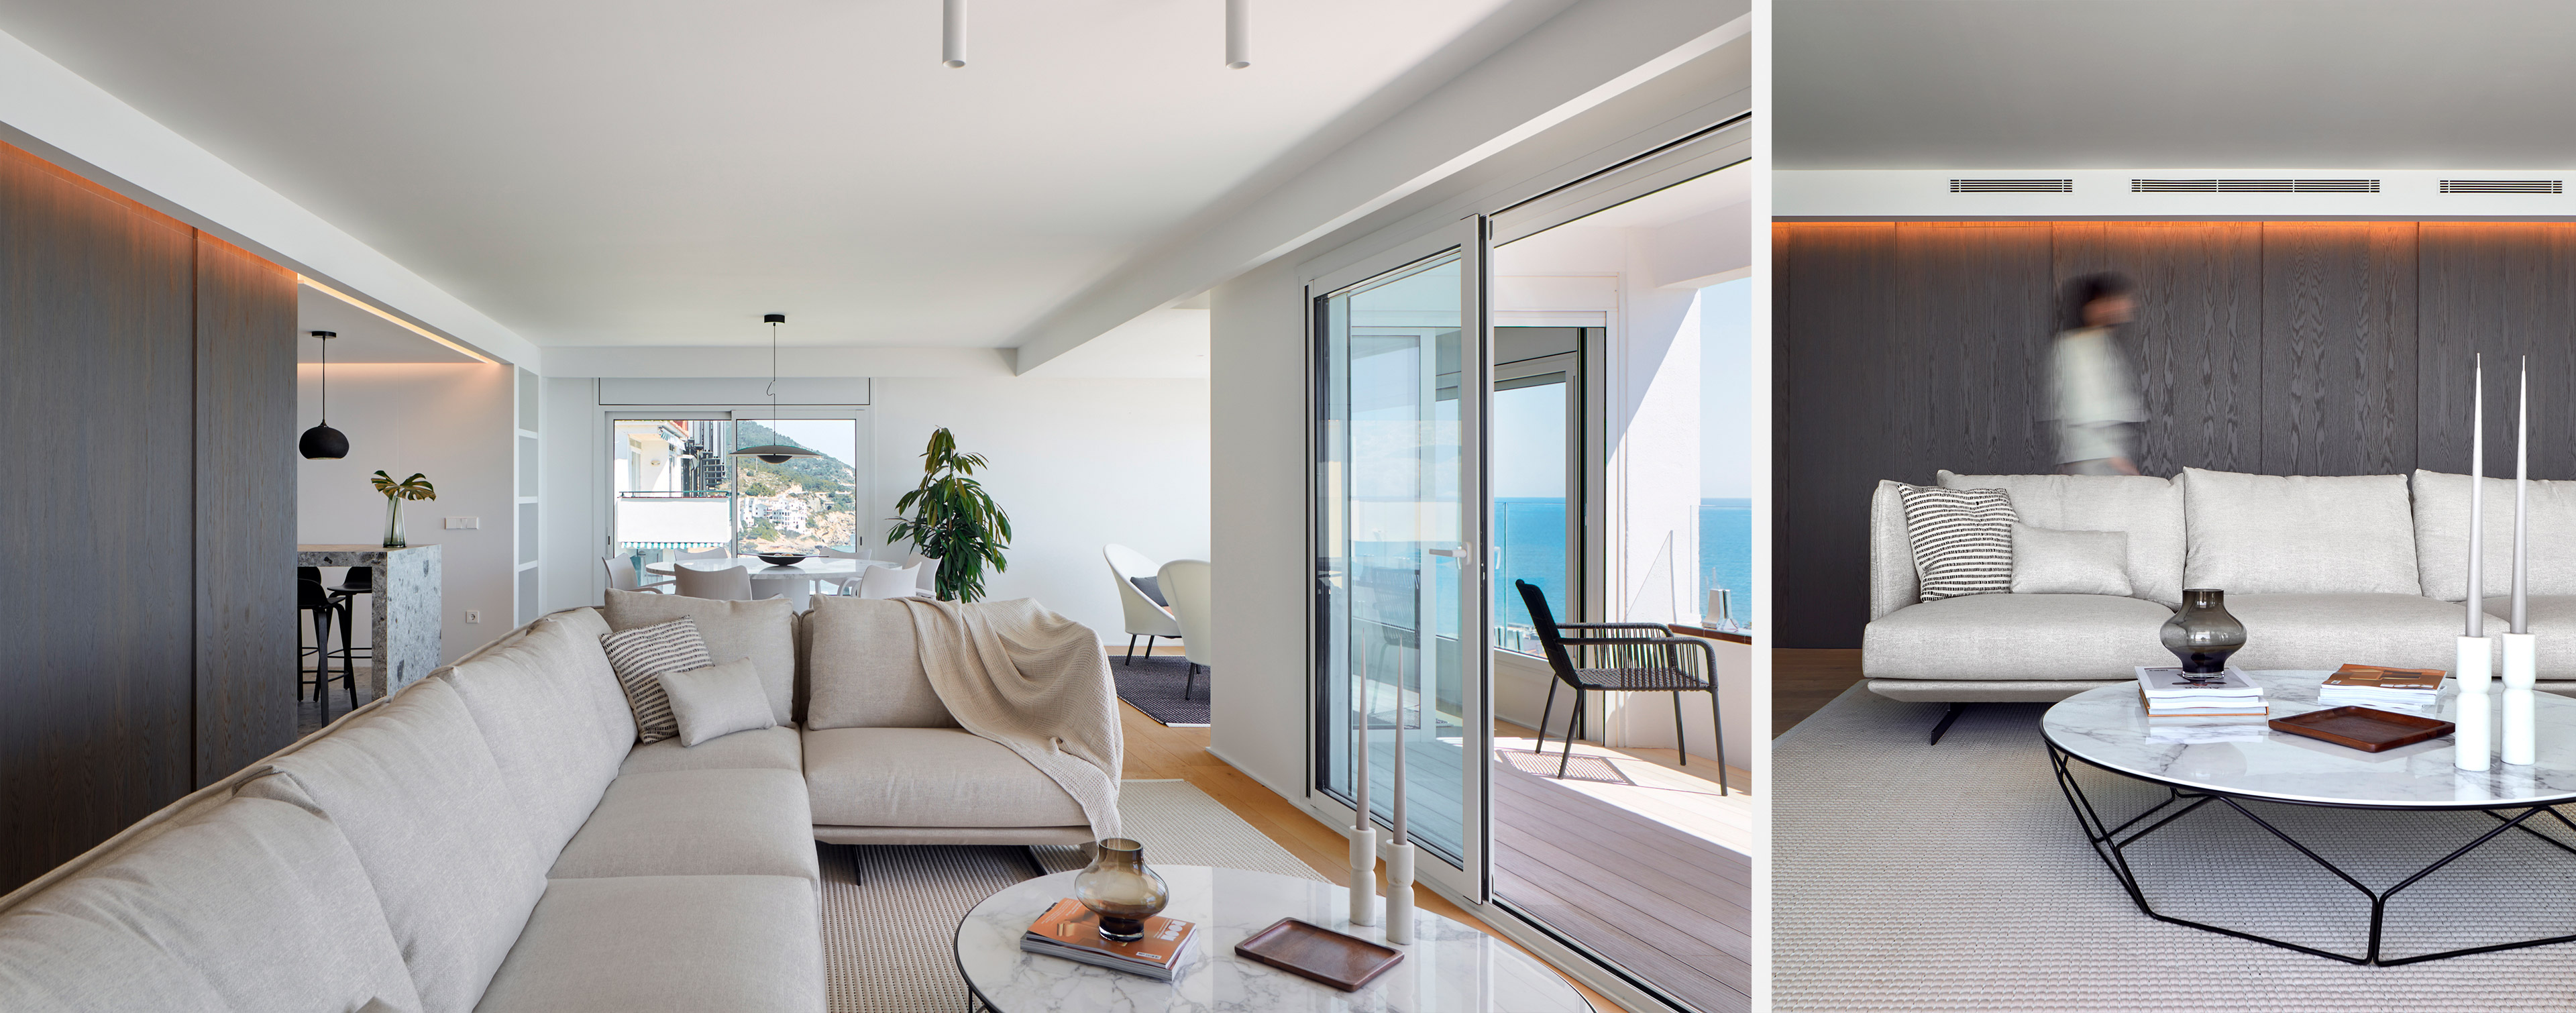 luv studio luxury architects sitges apartment IMG 02 - LUV Studio - Arquitectura y diseño - Barcelona